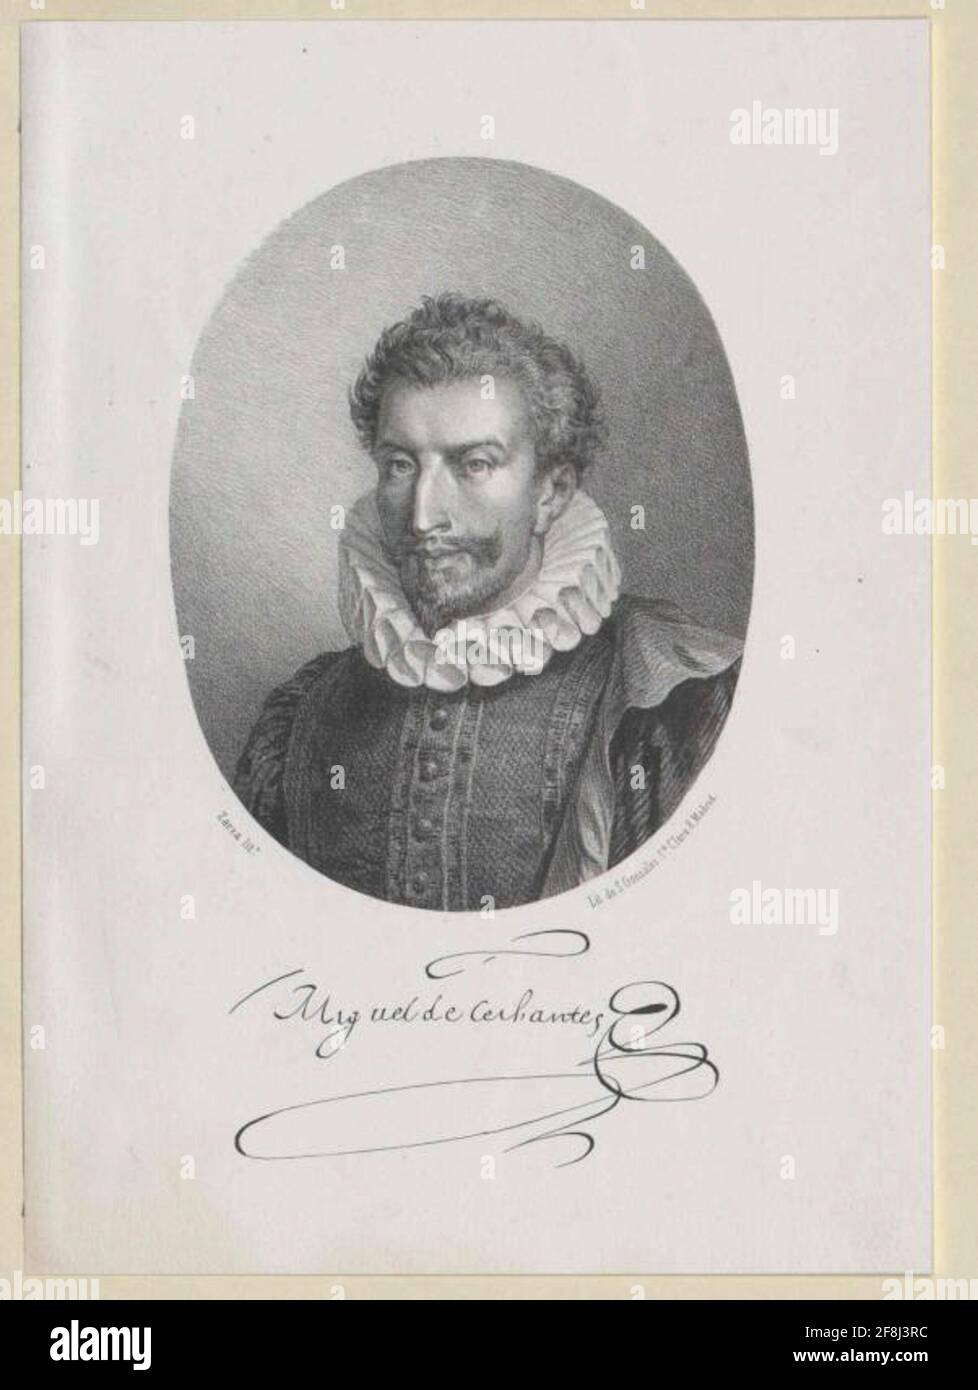 Cervantes Saavedra, Miguel de. Banque D'Images